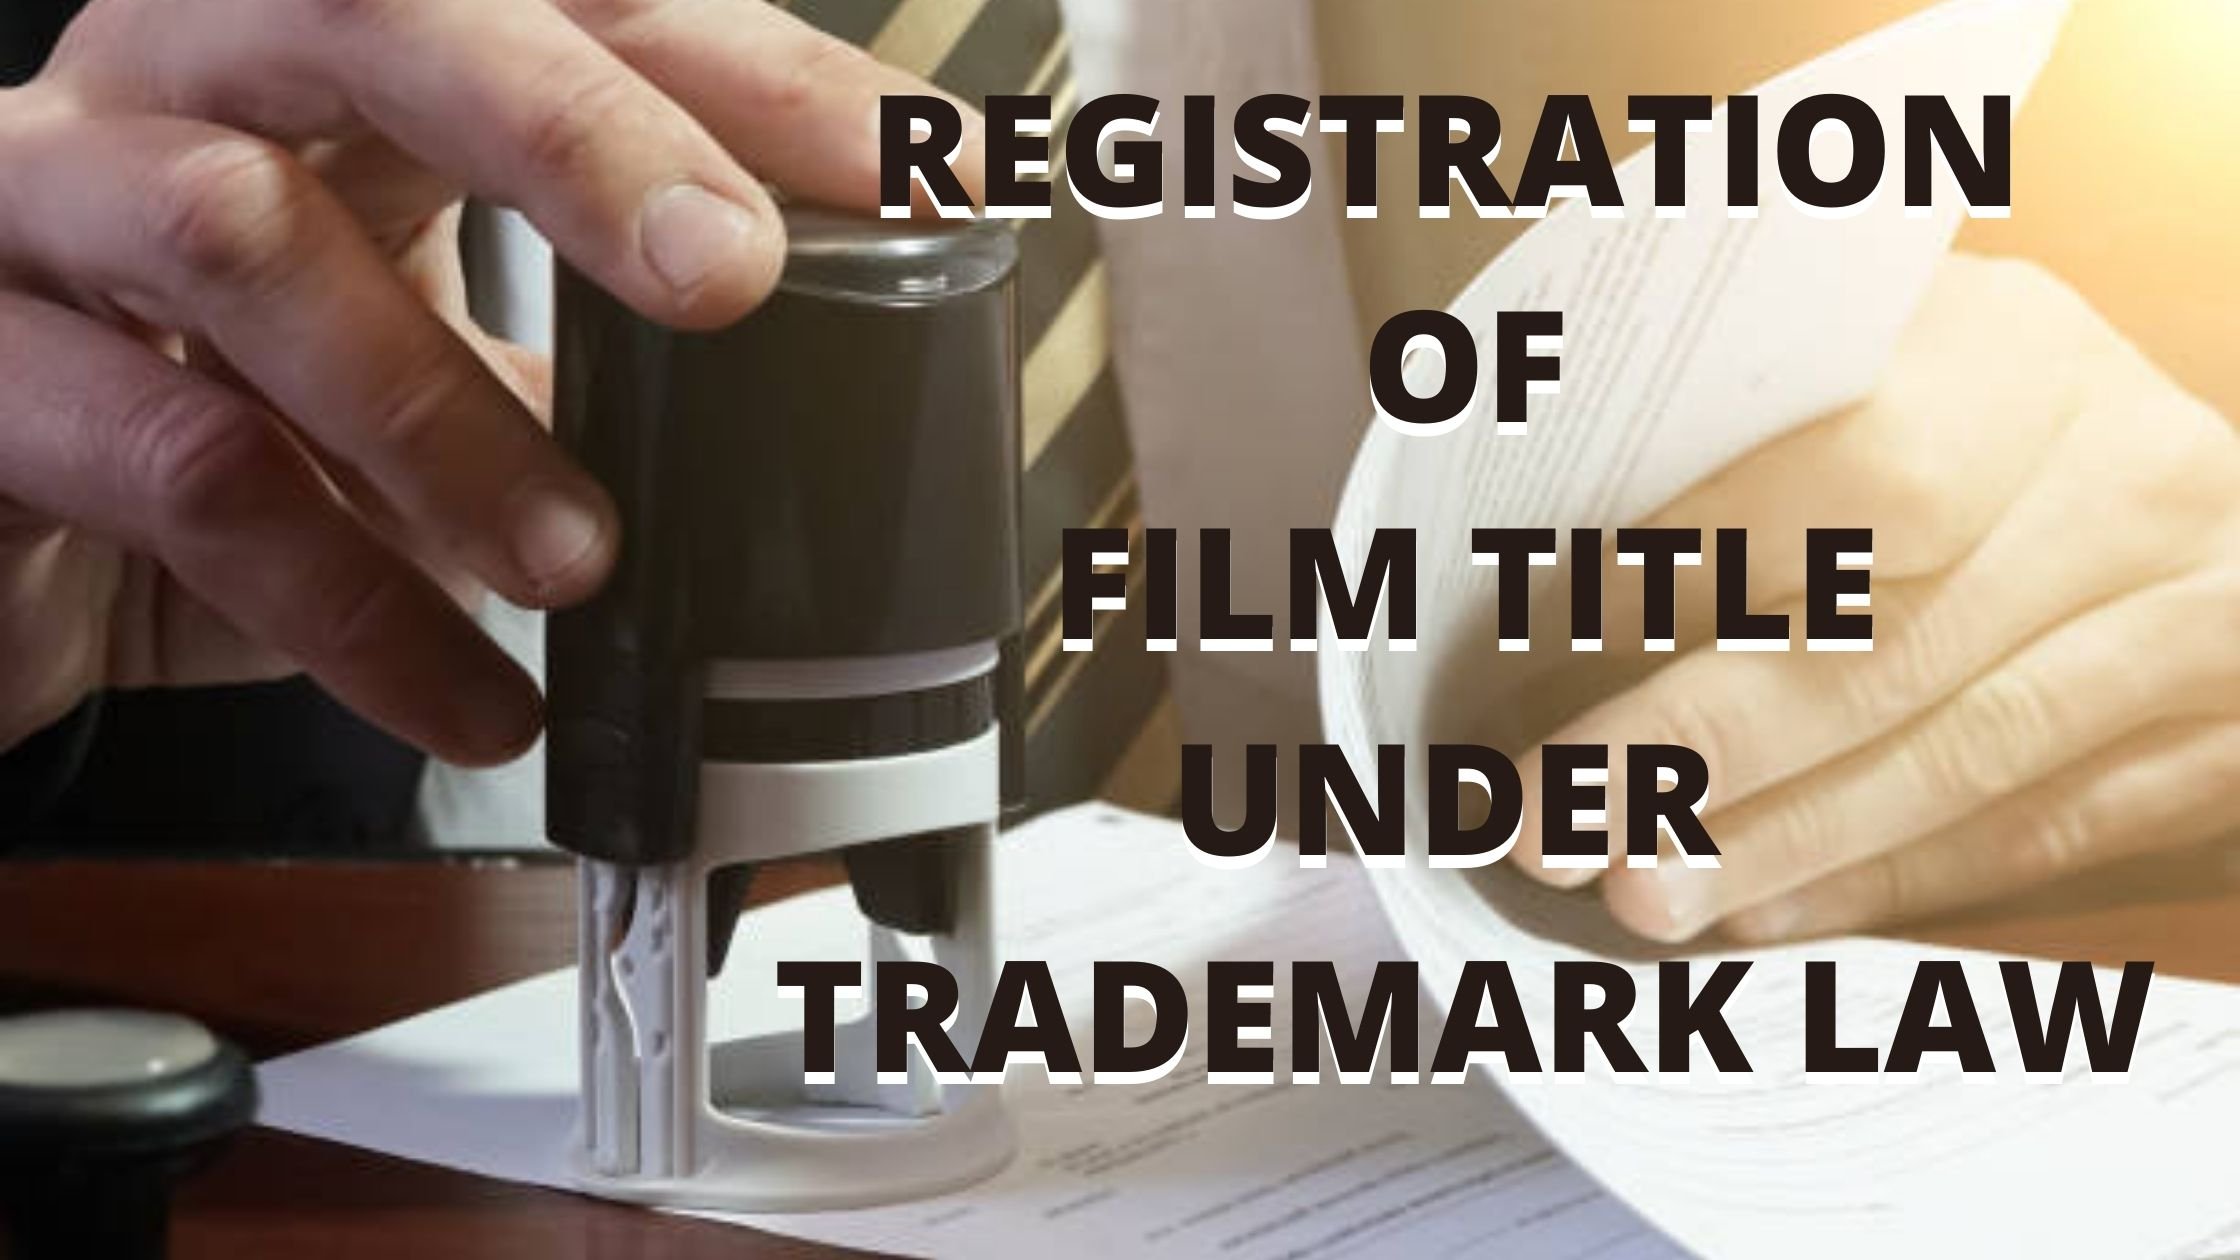 Registration of Film Titles under Trademark Law